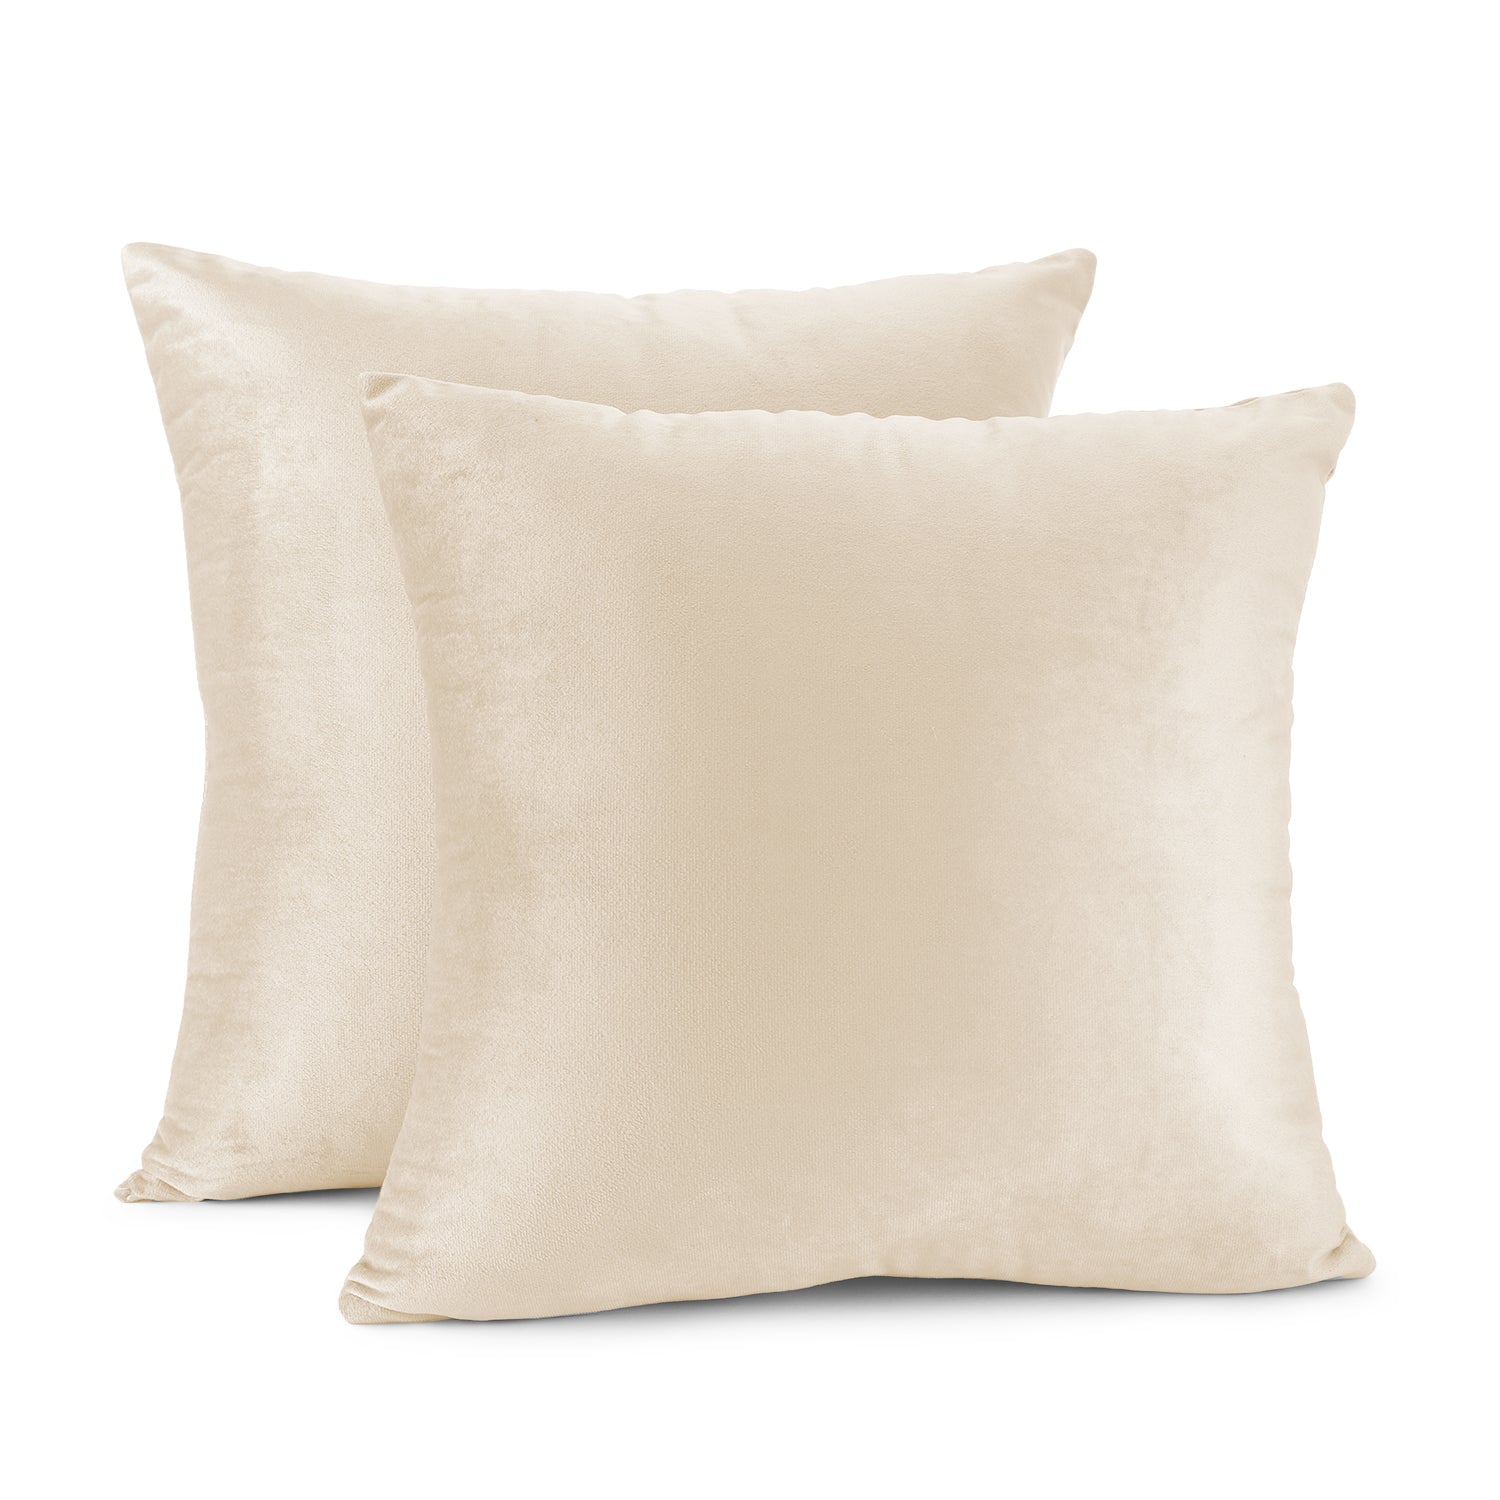  Nestl Plain Throw Pillows 16x16 Inches Decorative